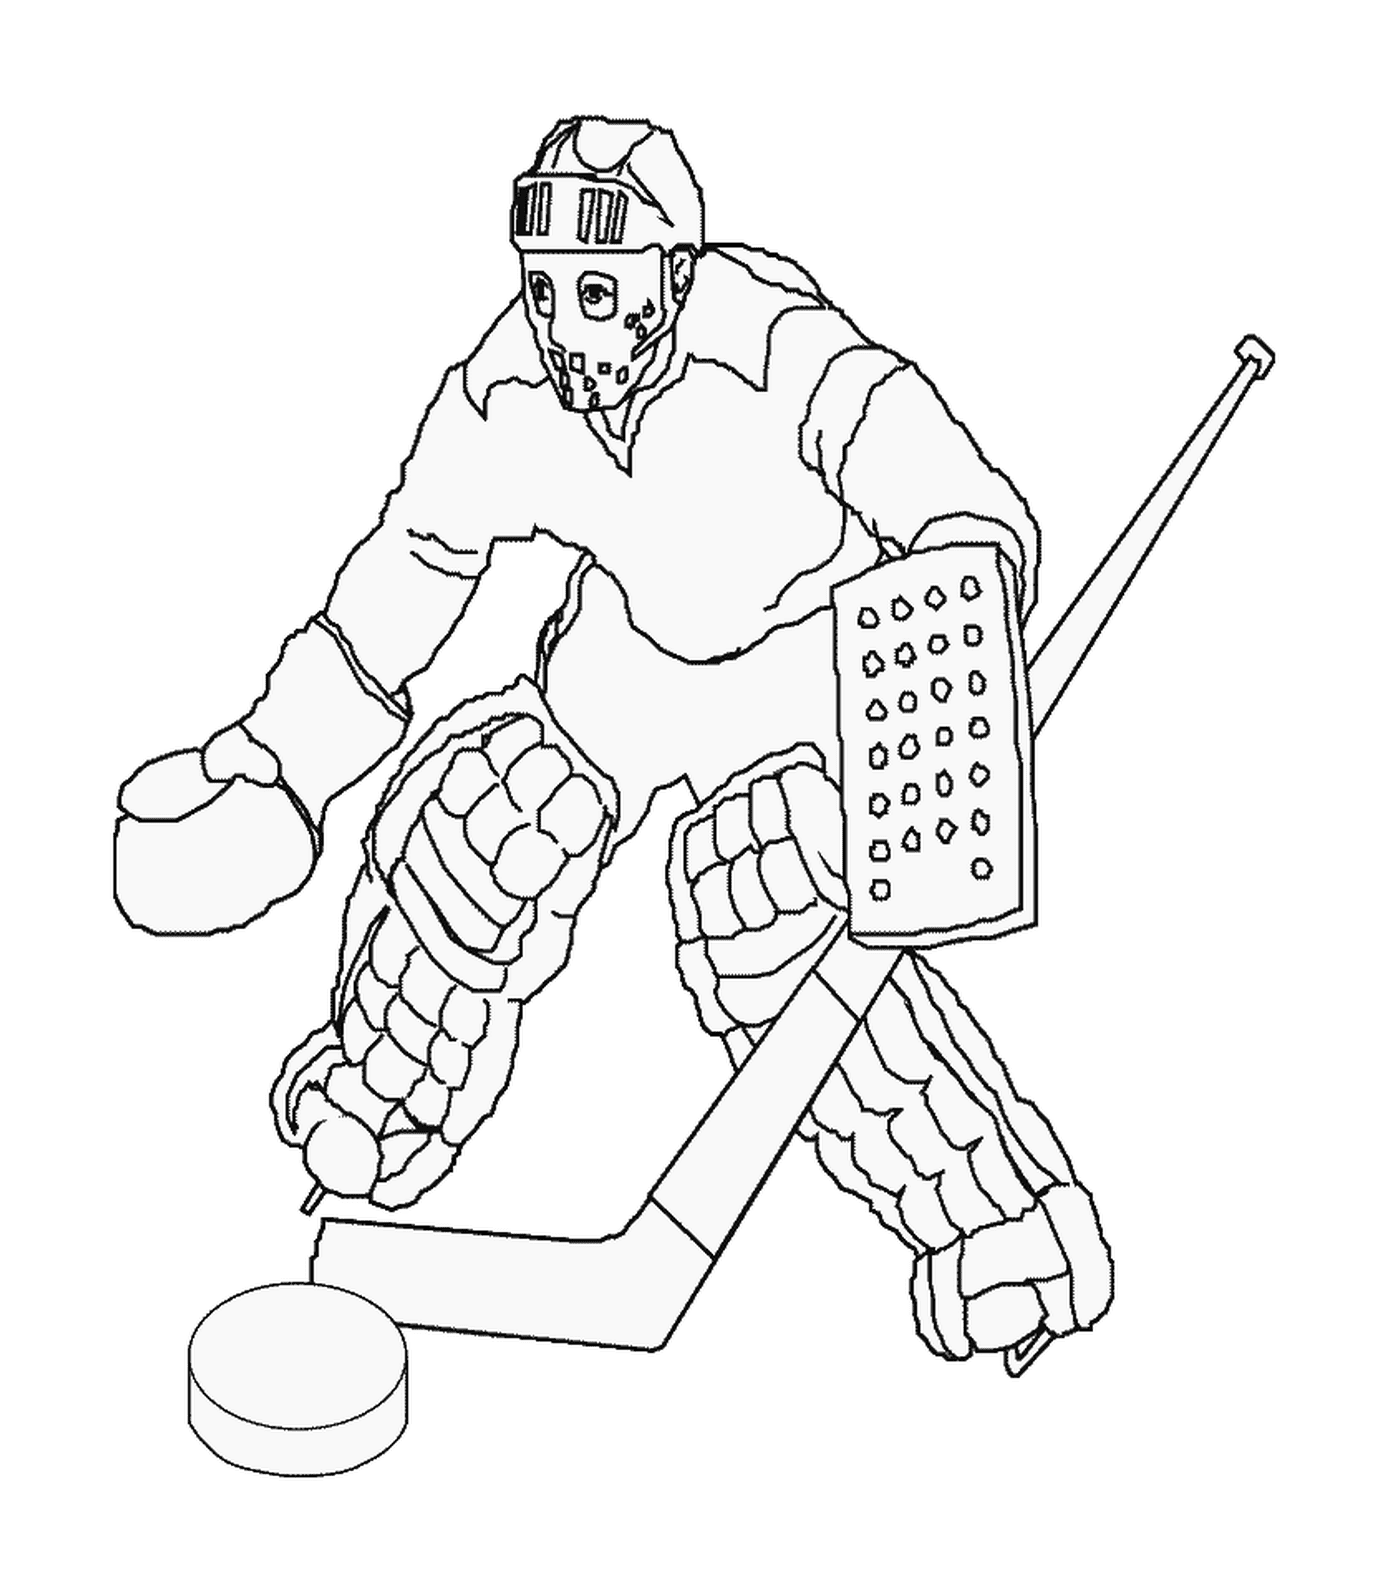  Ice Hockey Goalkeeper 